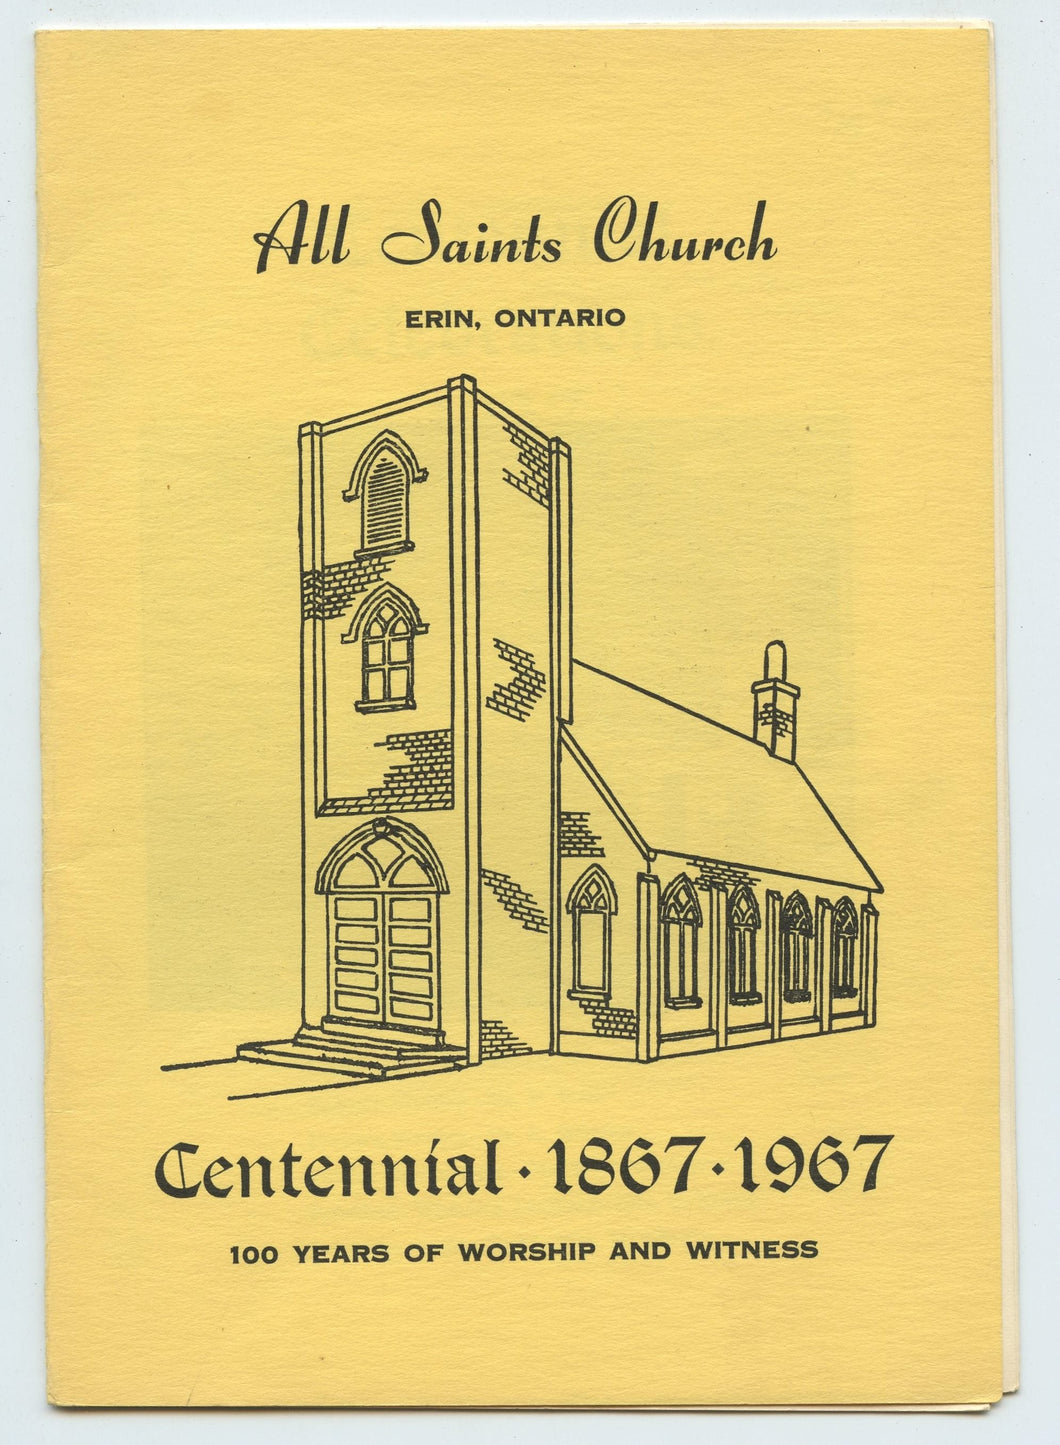 All Saints Church Centennial 1867-1967